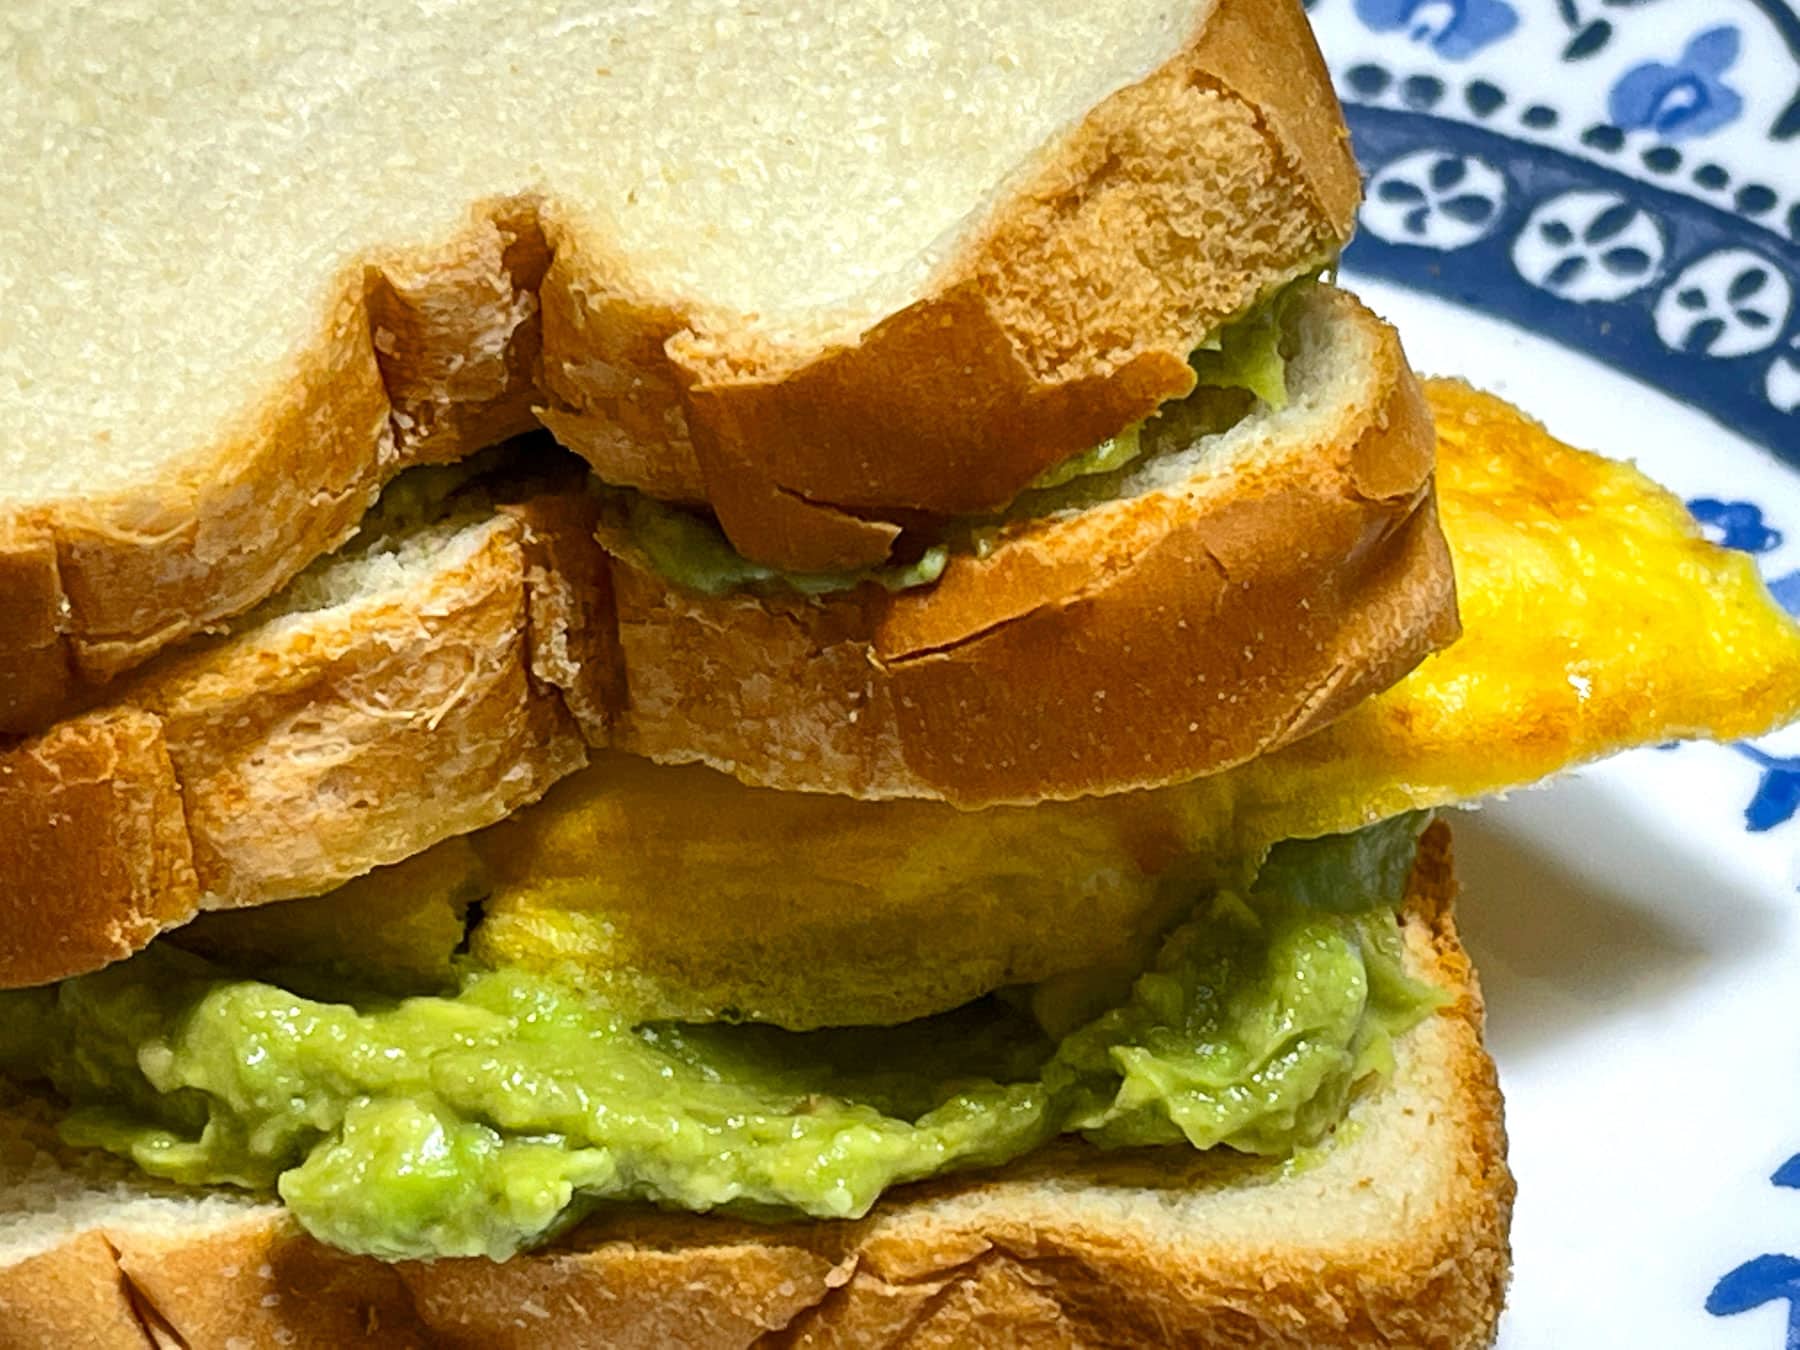 avocado egg sandwich